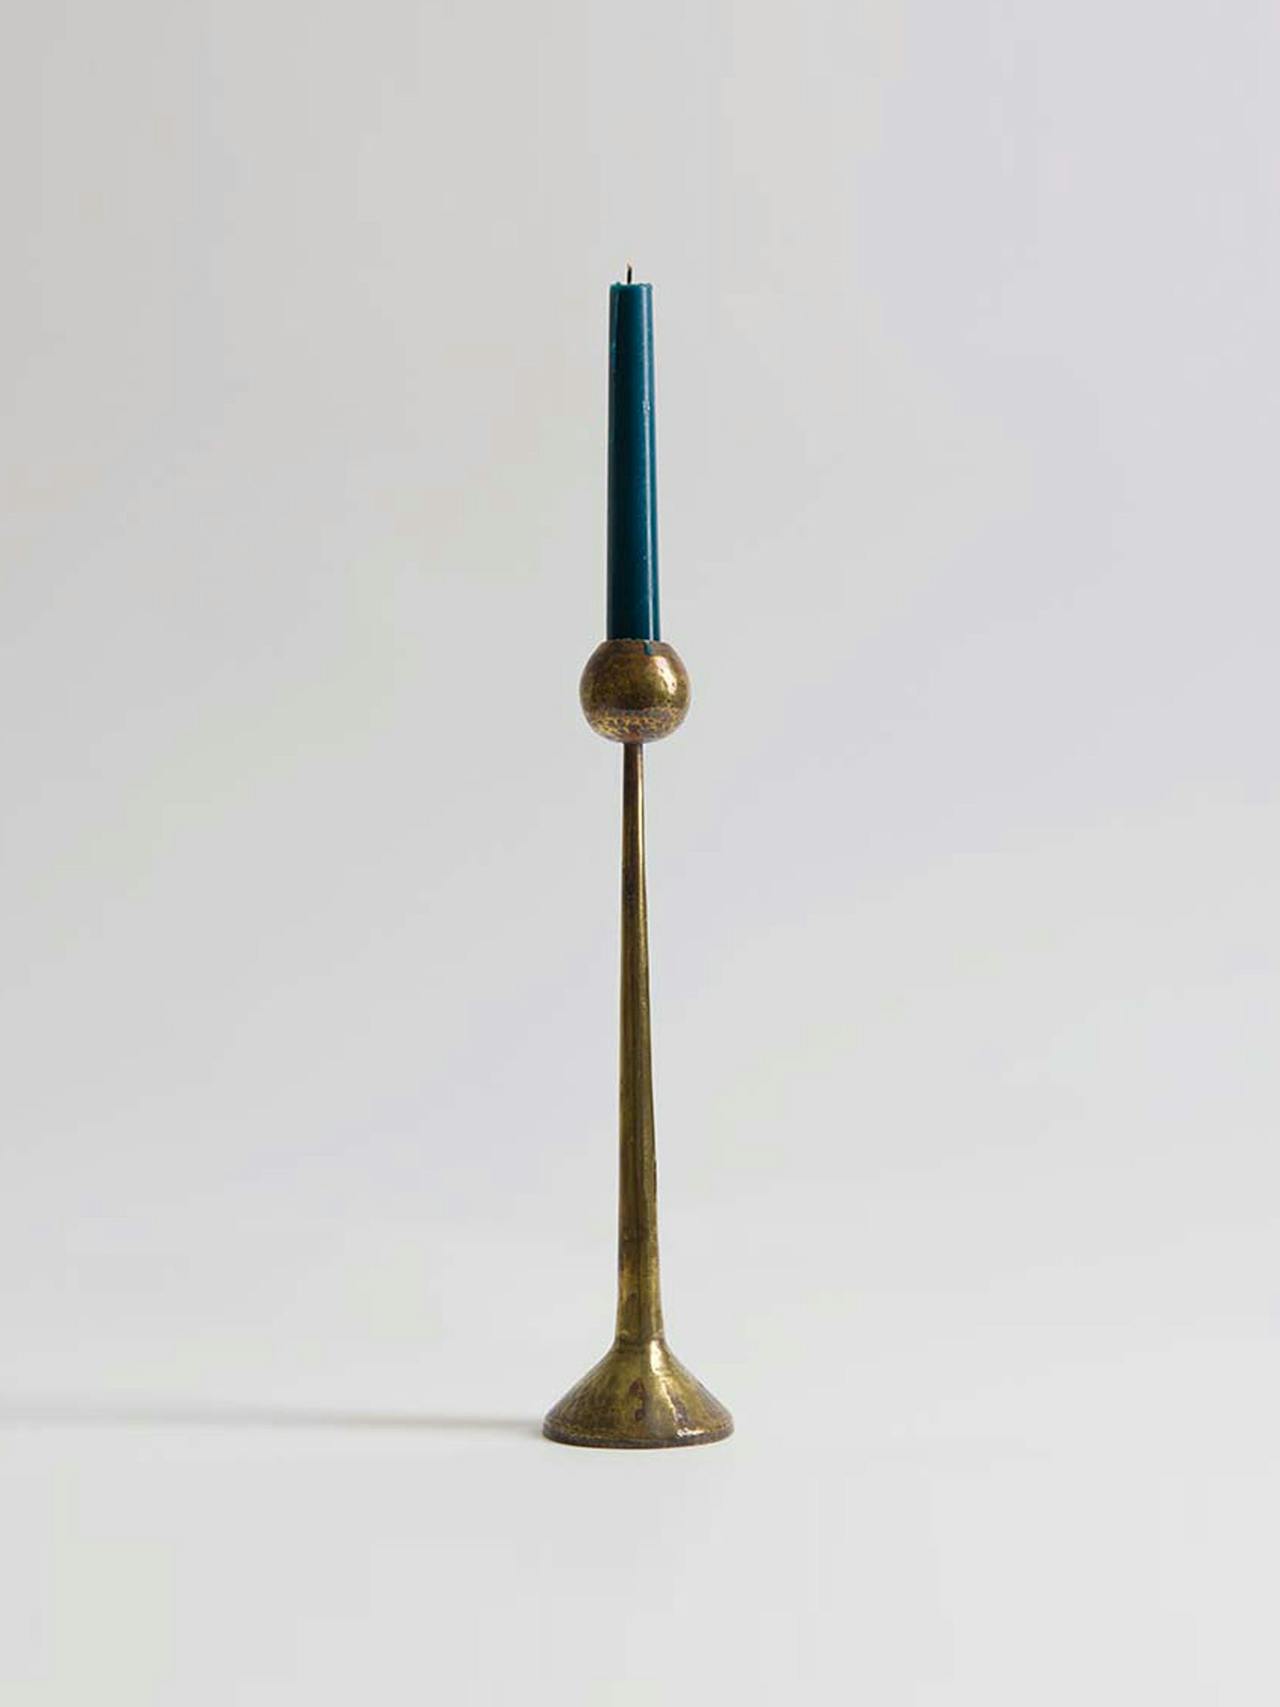 Irrawaddy brass candlestick